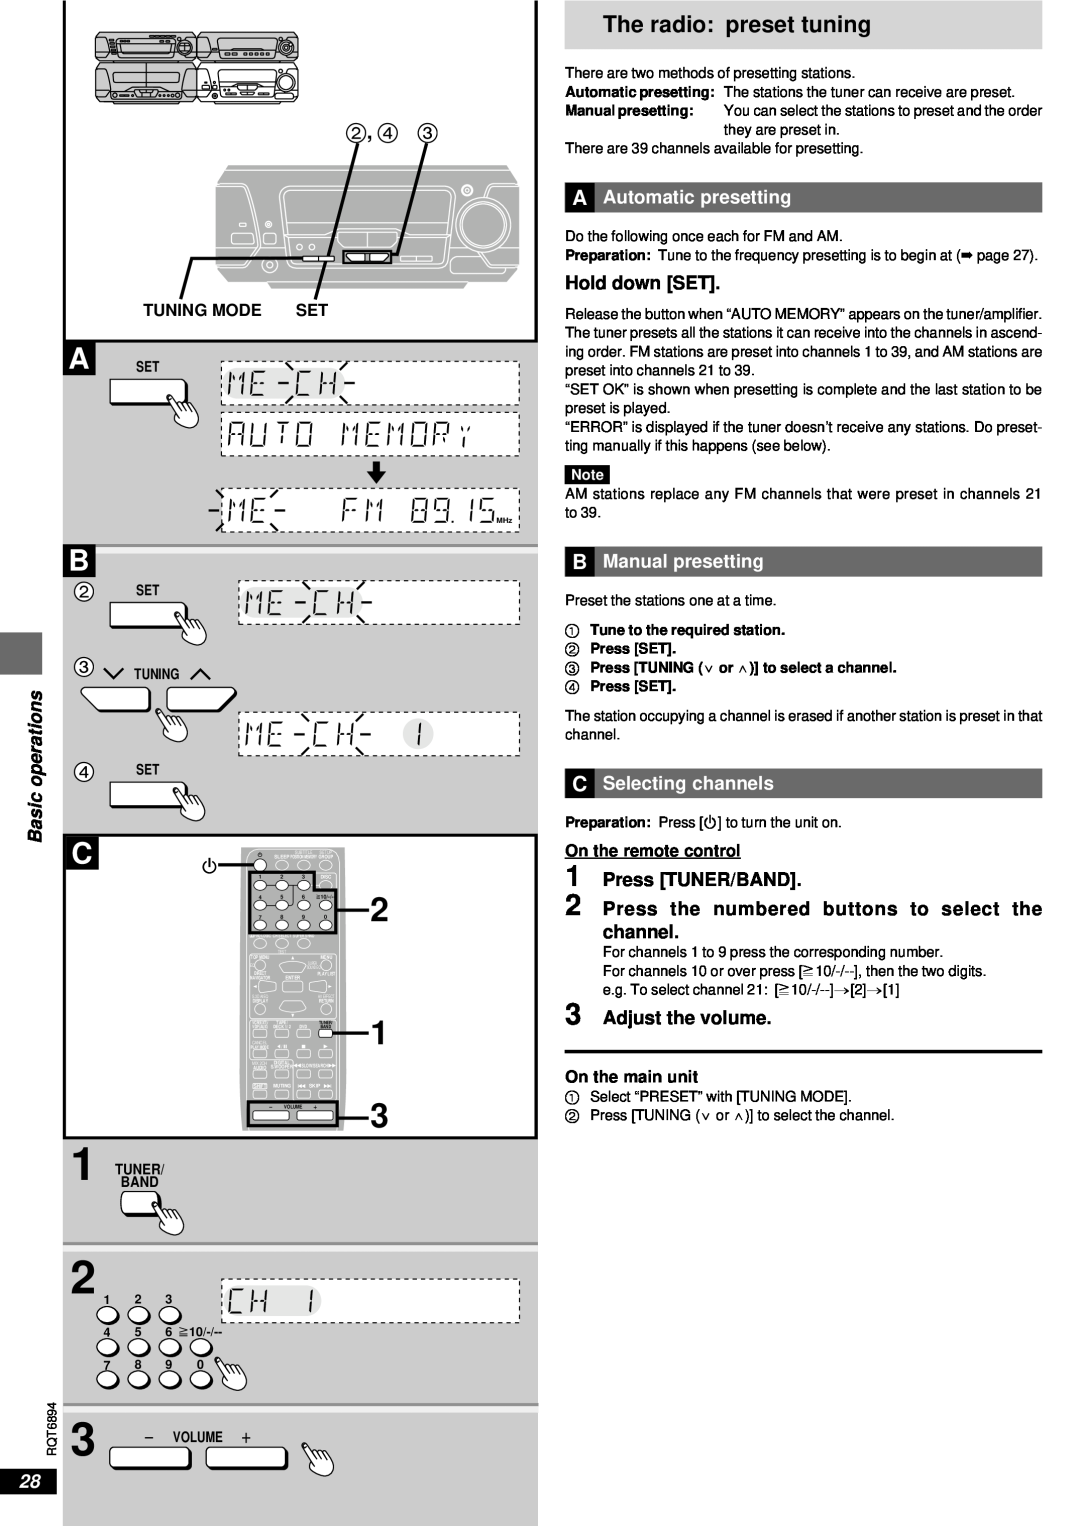 Technics SC-DV290 manual The radio preset tuning, Basic operations, Hold down SET, Press TUNER/BAND, Adjust the volume 